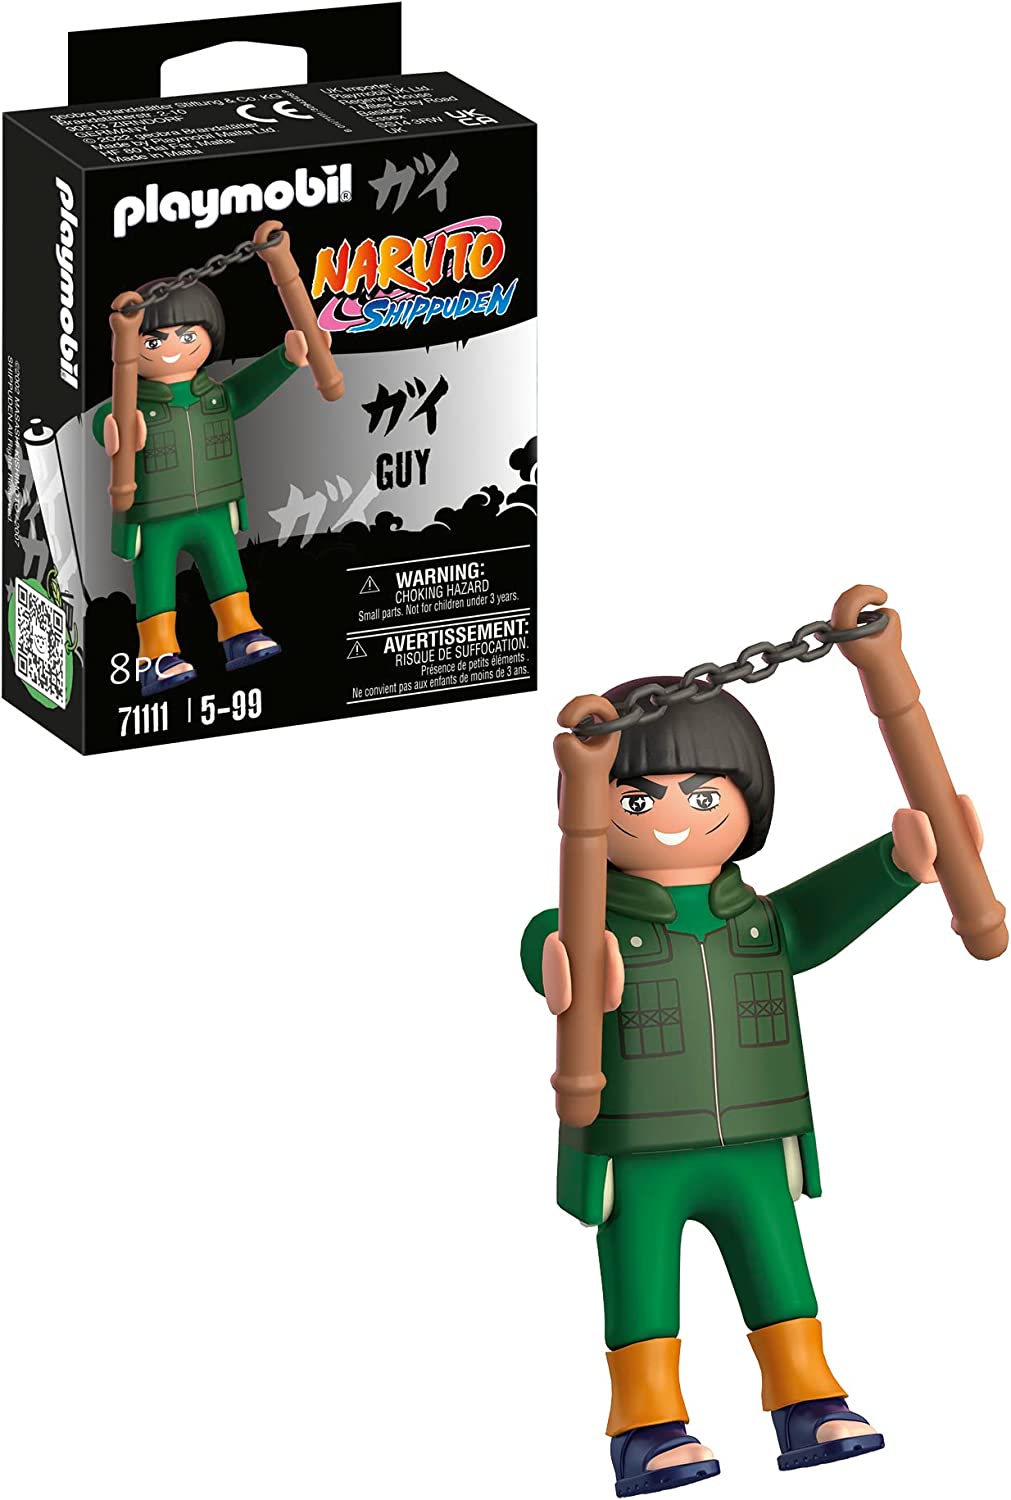 Playmobil 71111 Naruto: Mighty Guy Figure Set